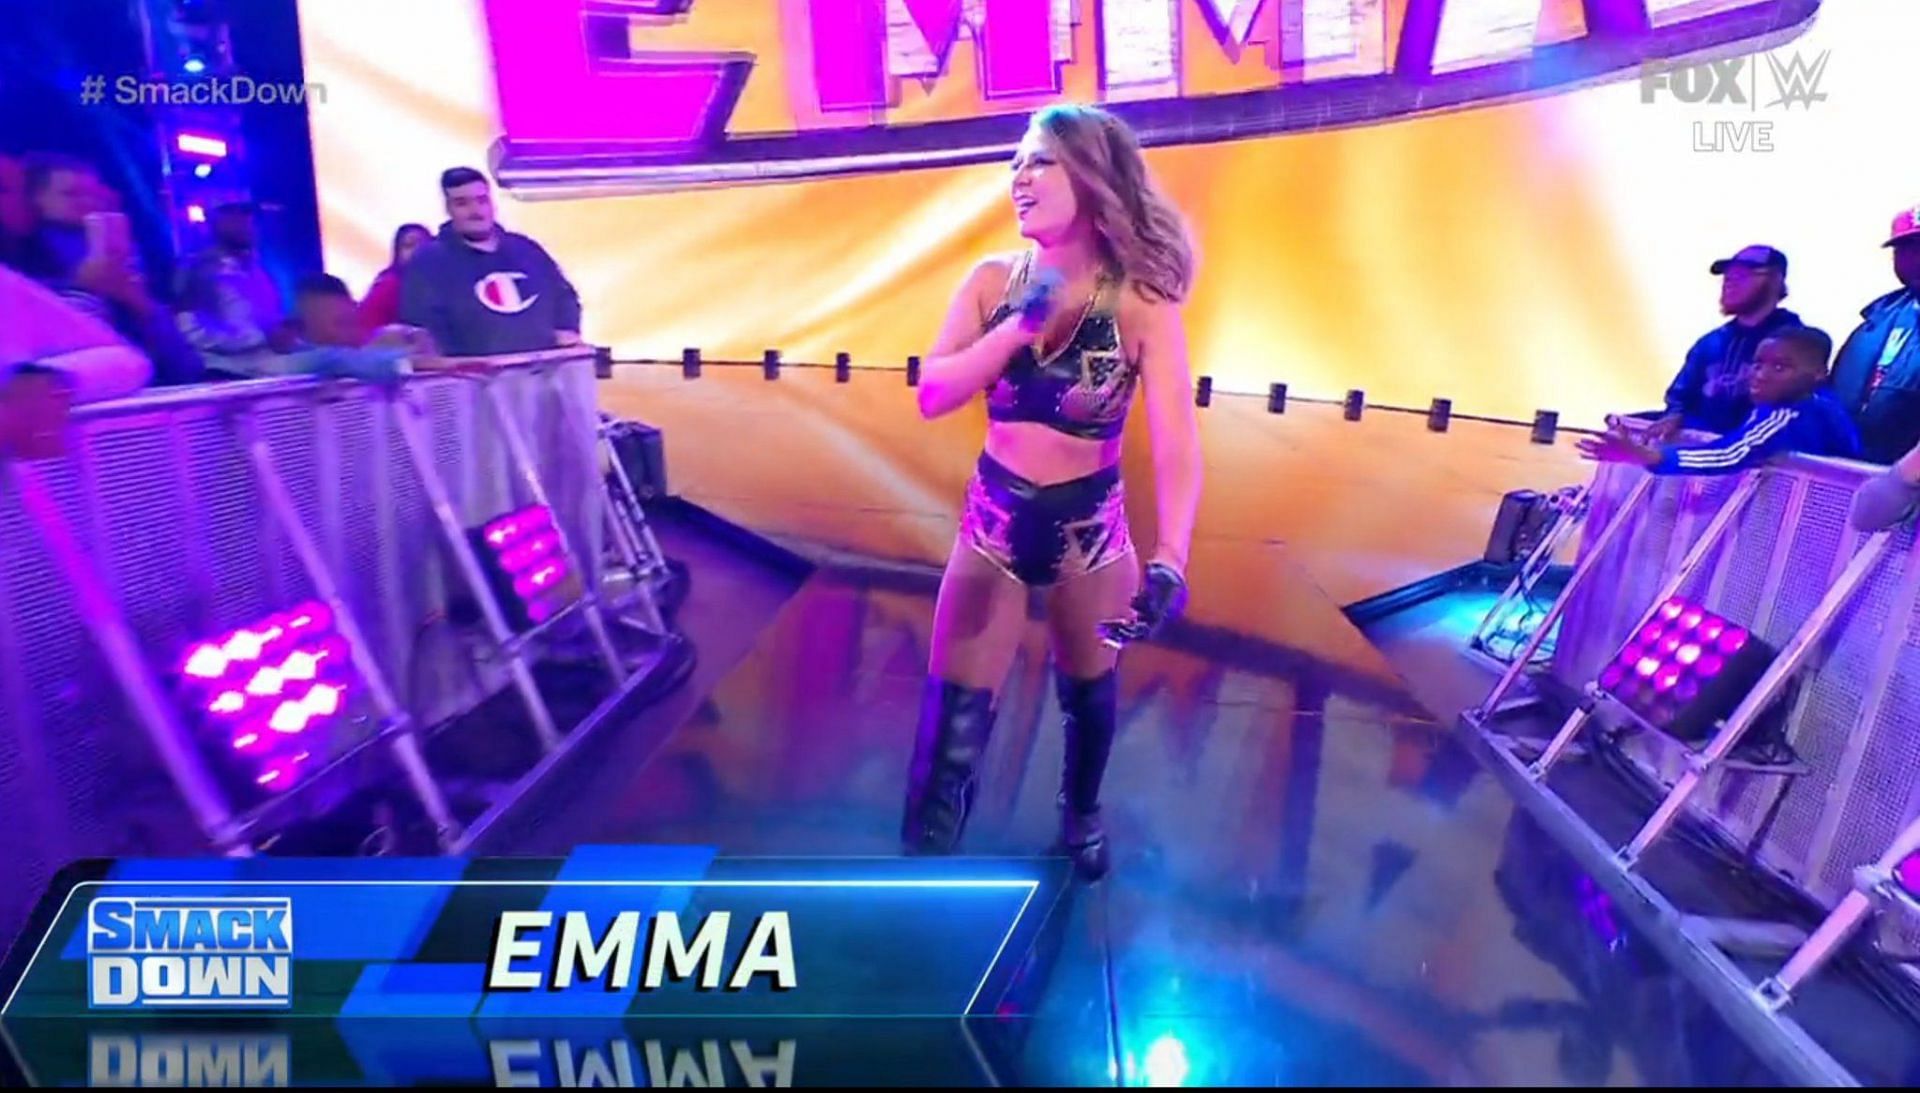 Emma returned to WWE on tonight